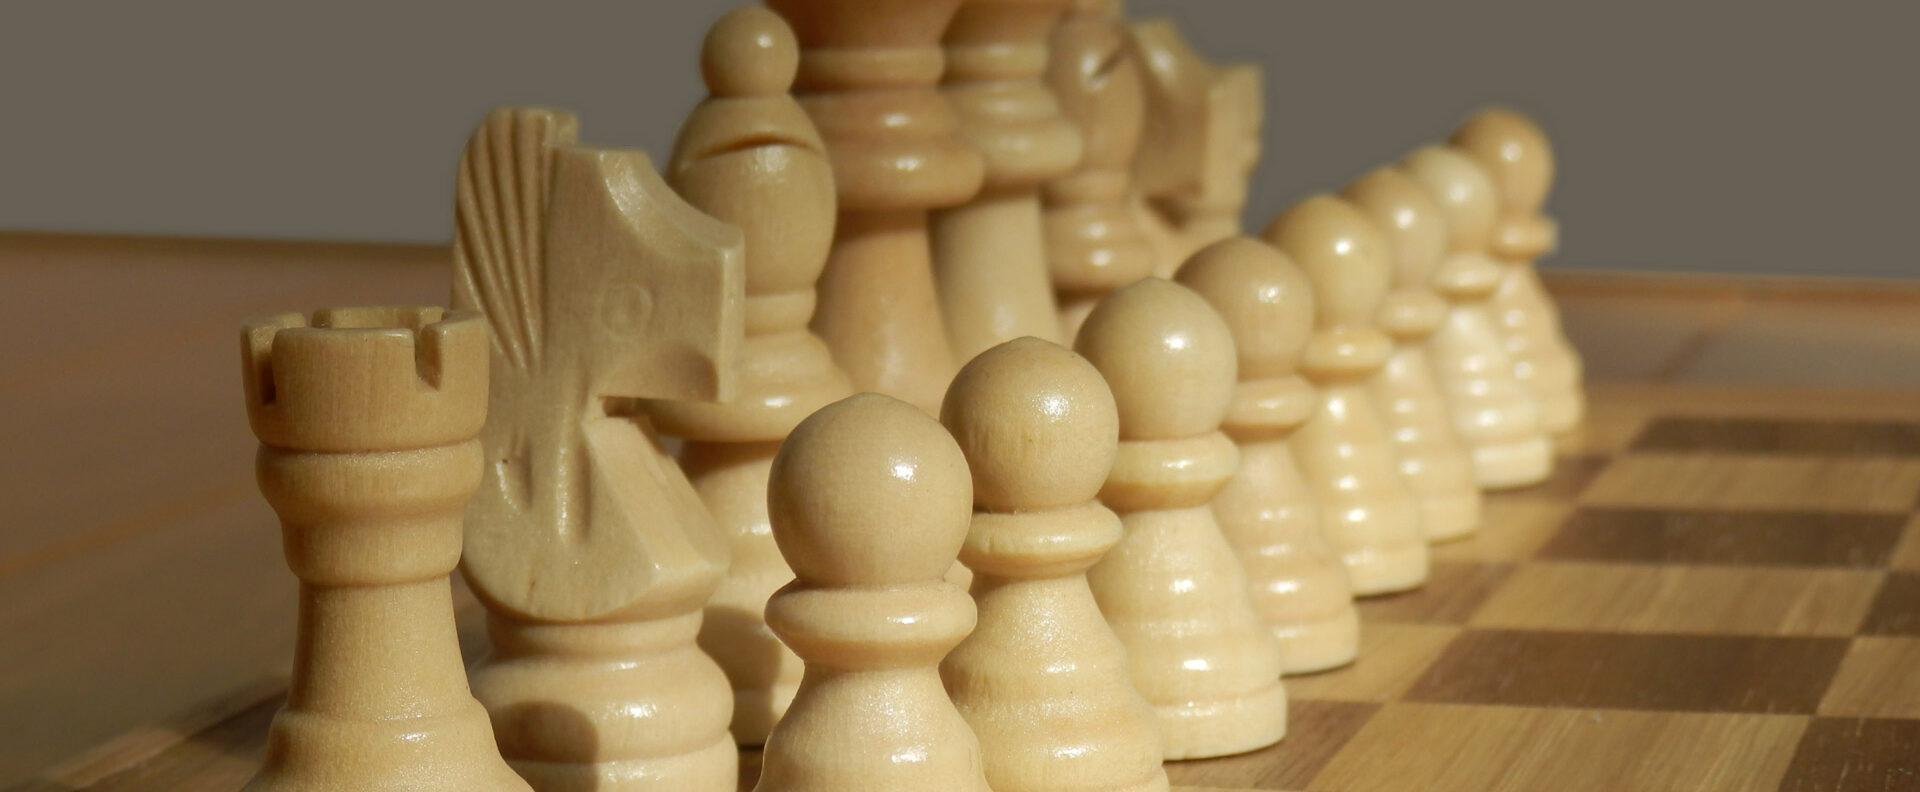 Ver categoría de ajedrez de madera portátil